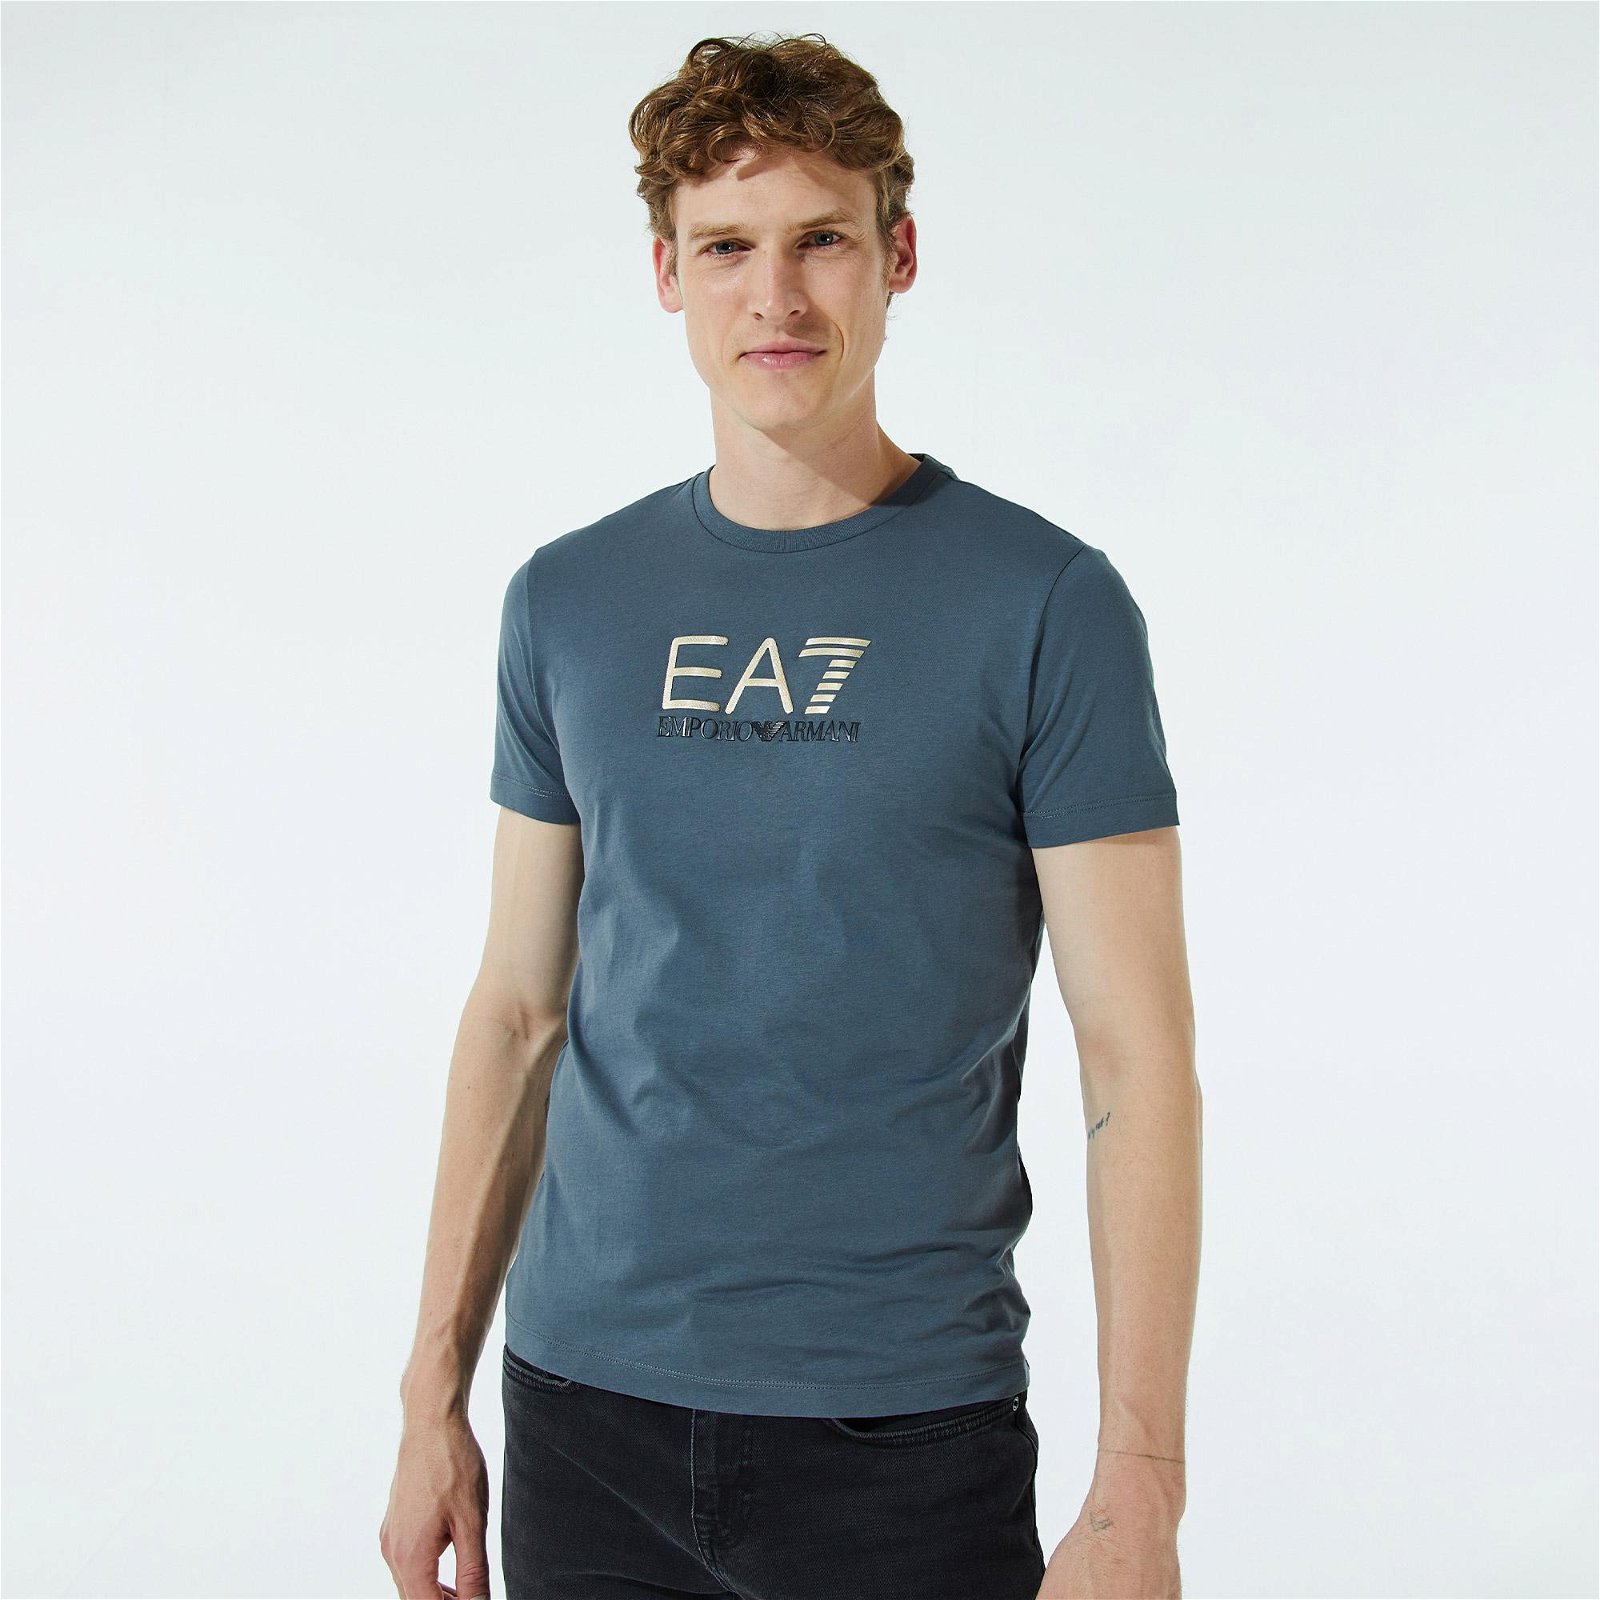 EA7 Emporio Armani Erkek Gri T-Shirt